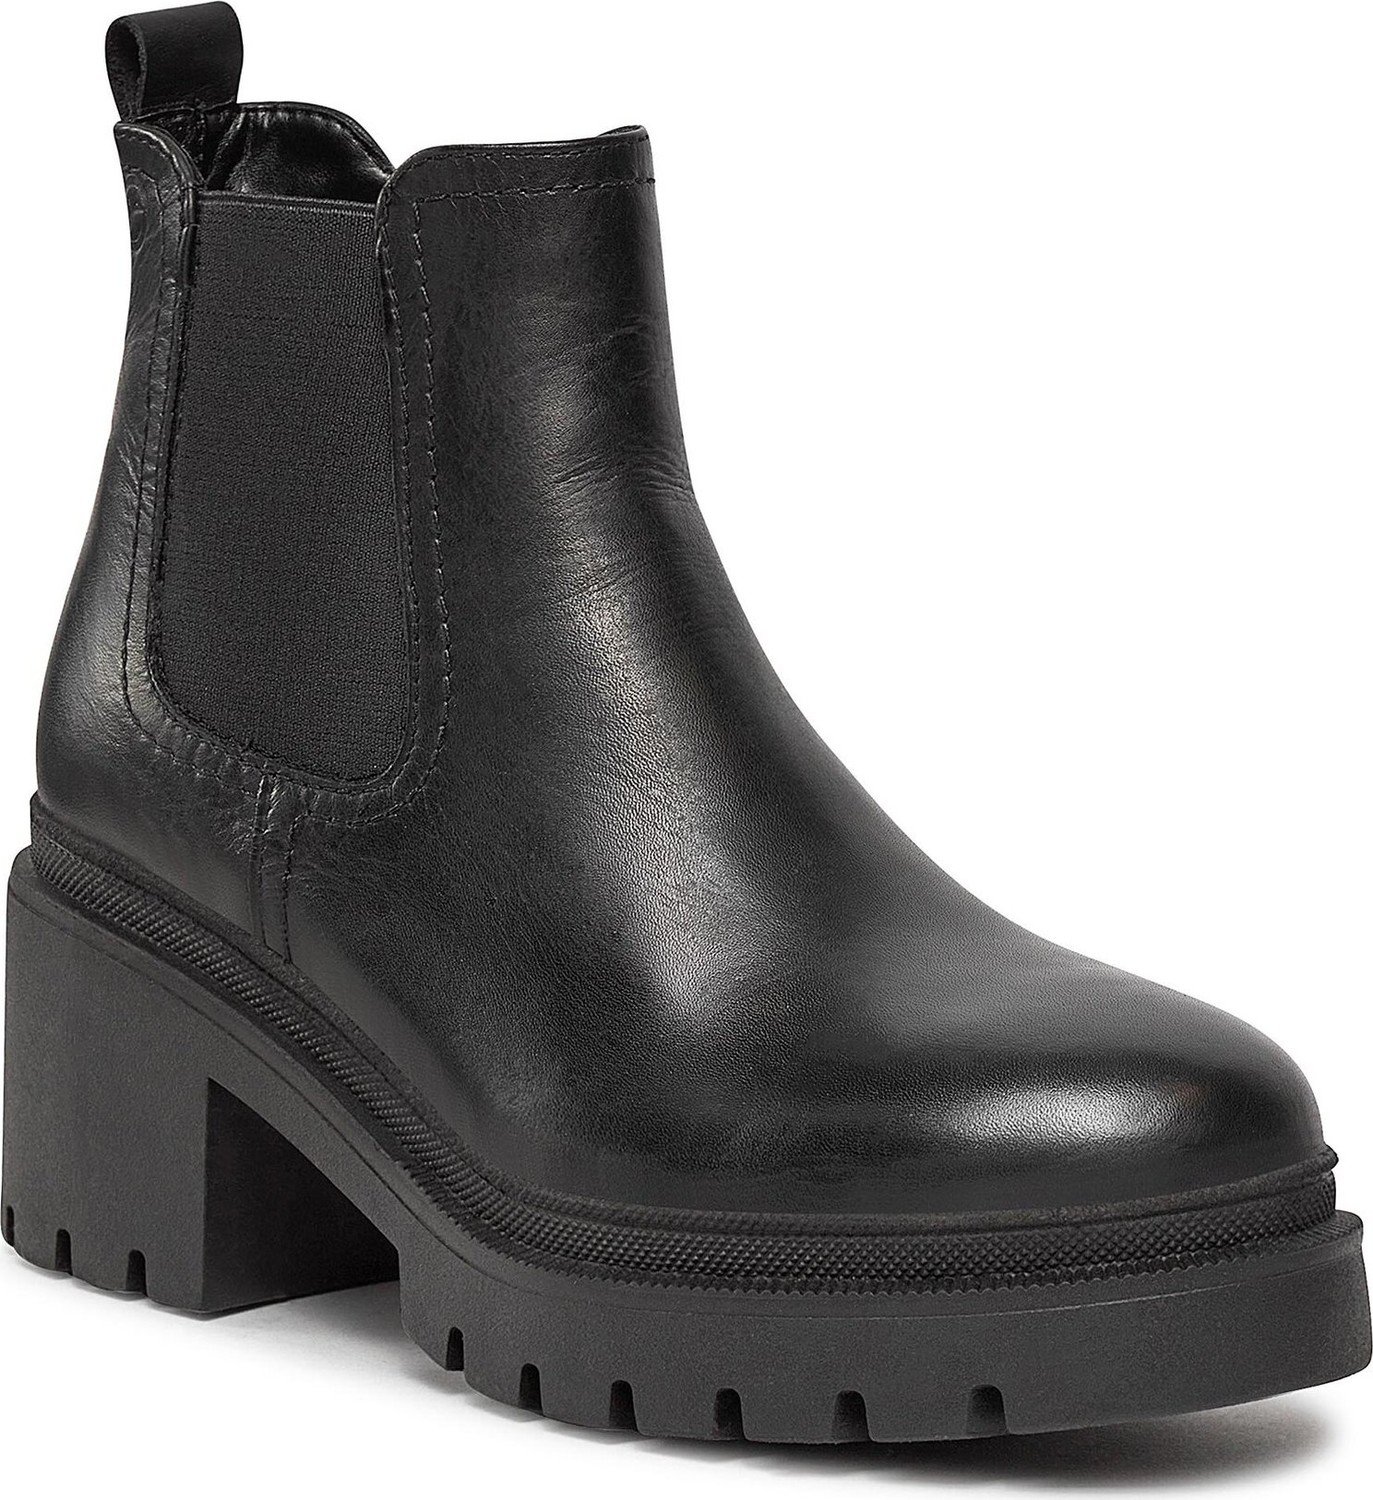 Kotníková obuv s elastickým prvkem Tamaris 1-25459-41 Black Leather 003